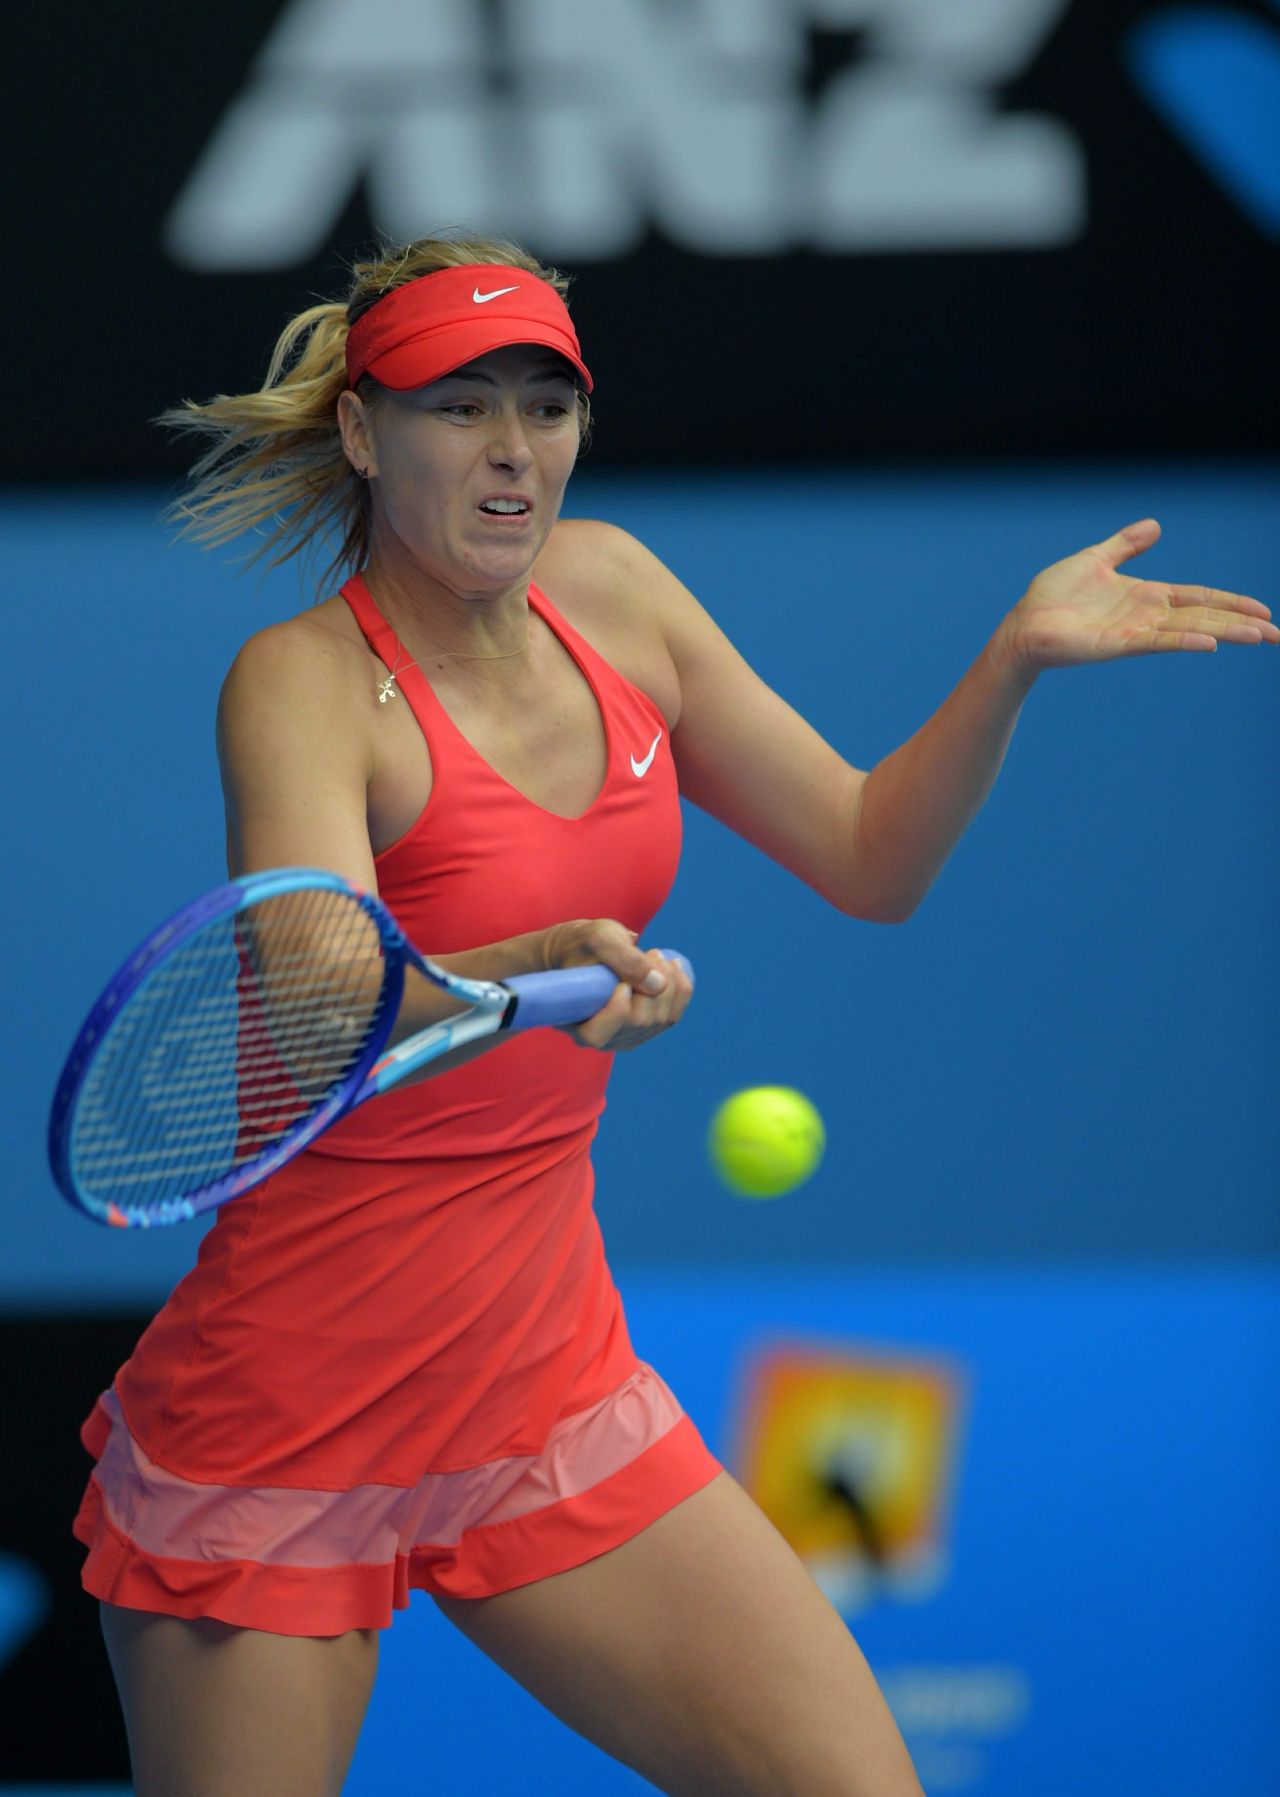 Maria Sharapova – 2015 Australian Open in Melbourne Quarter Final1280 x 1797